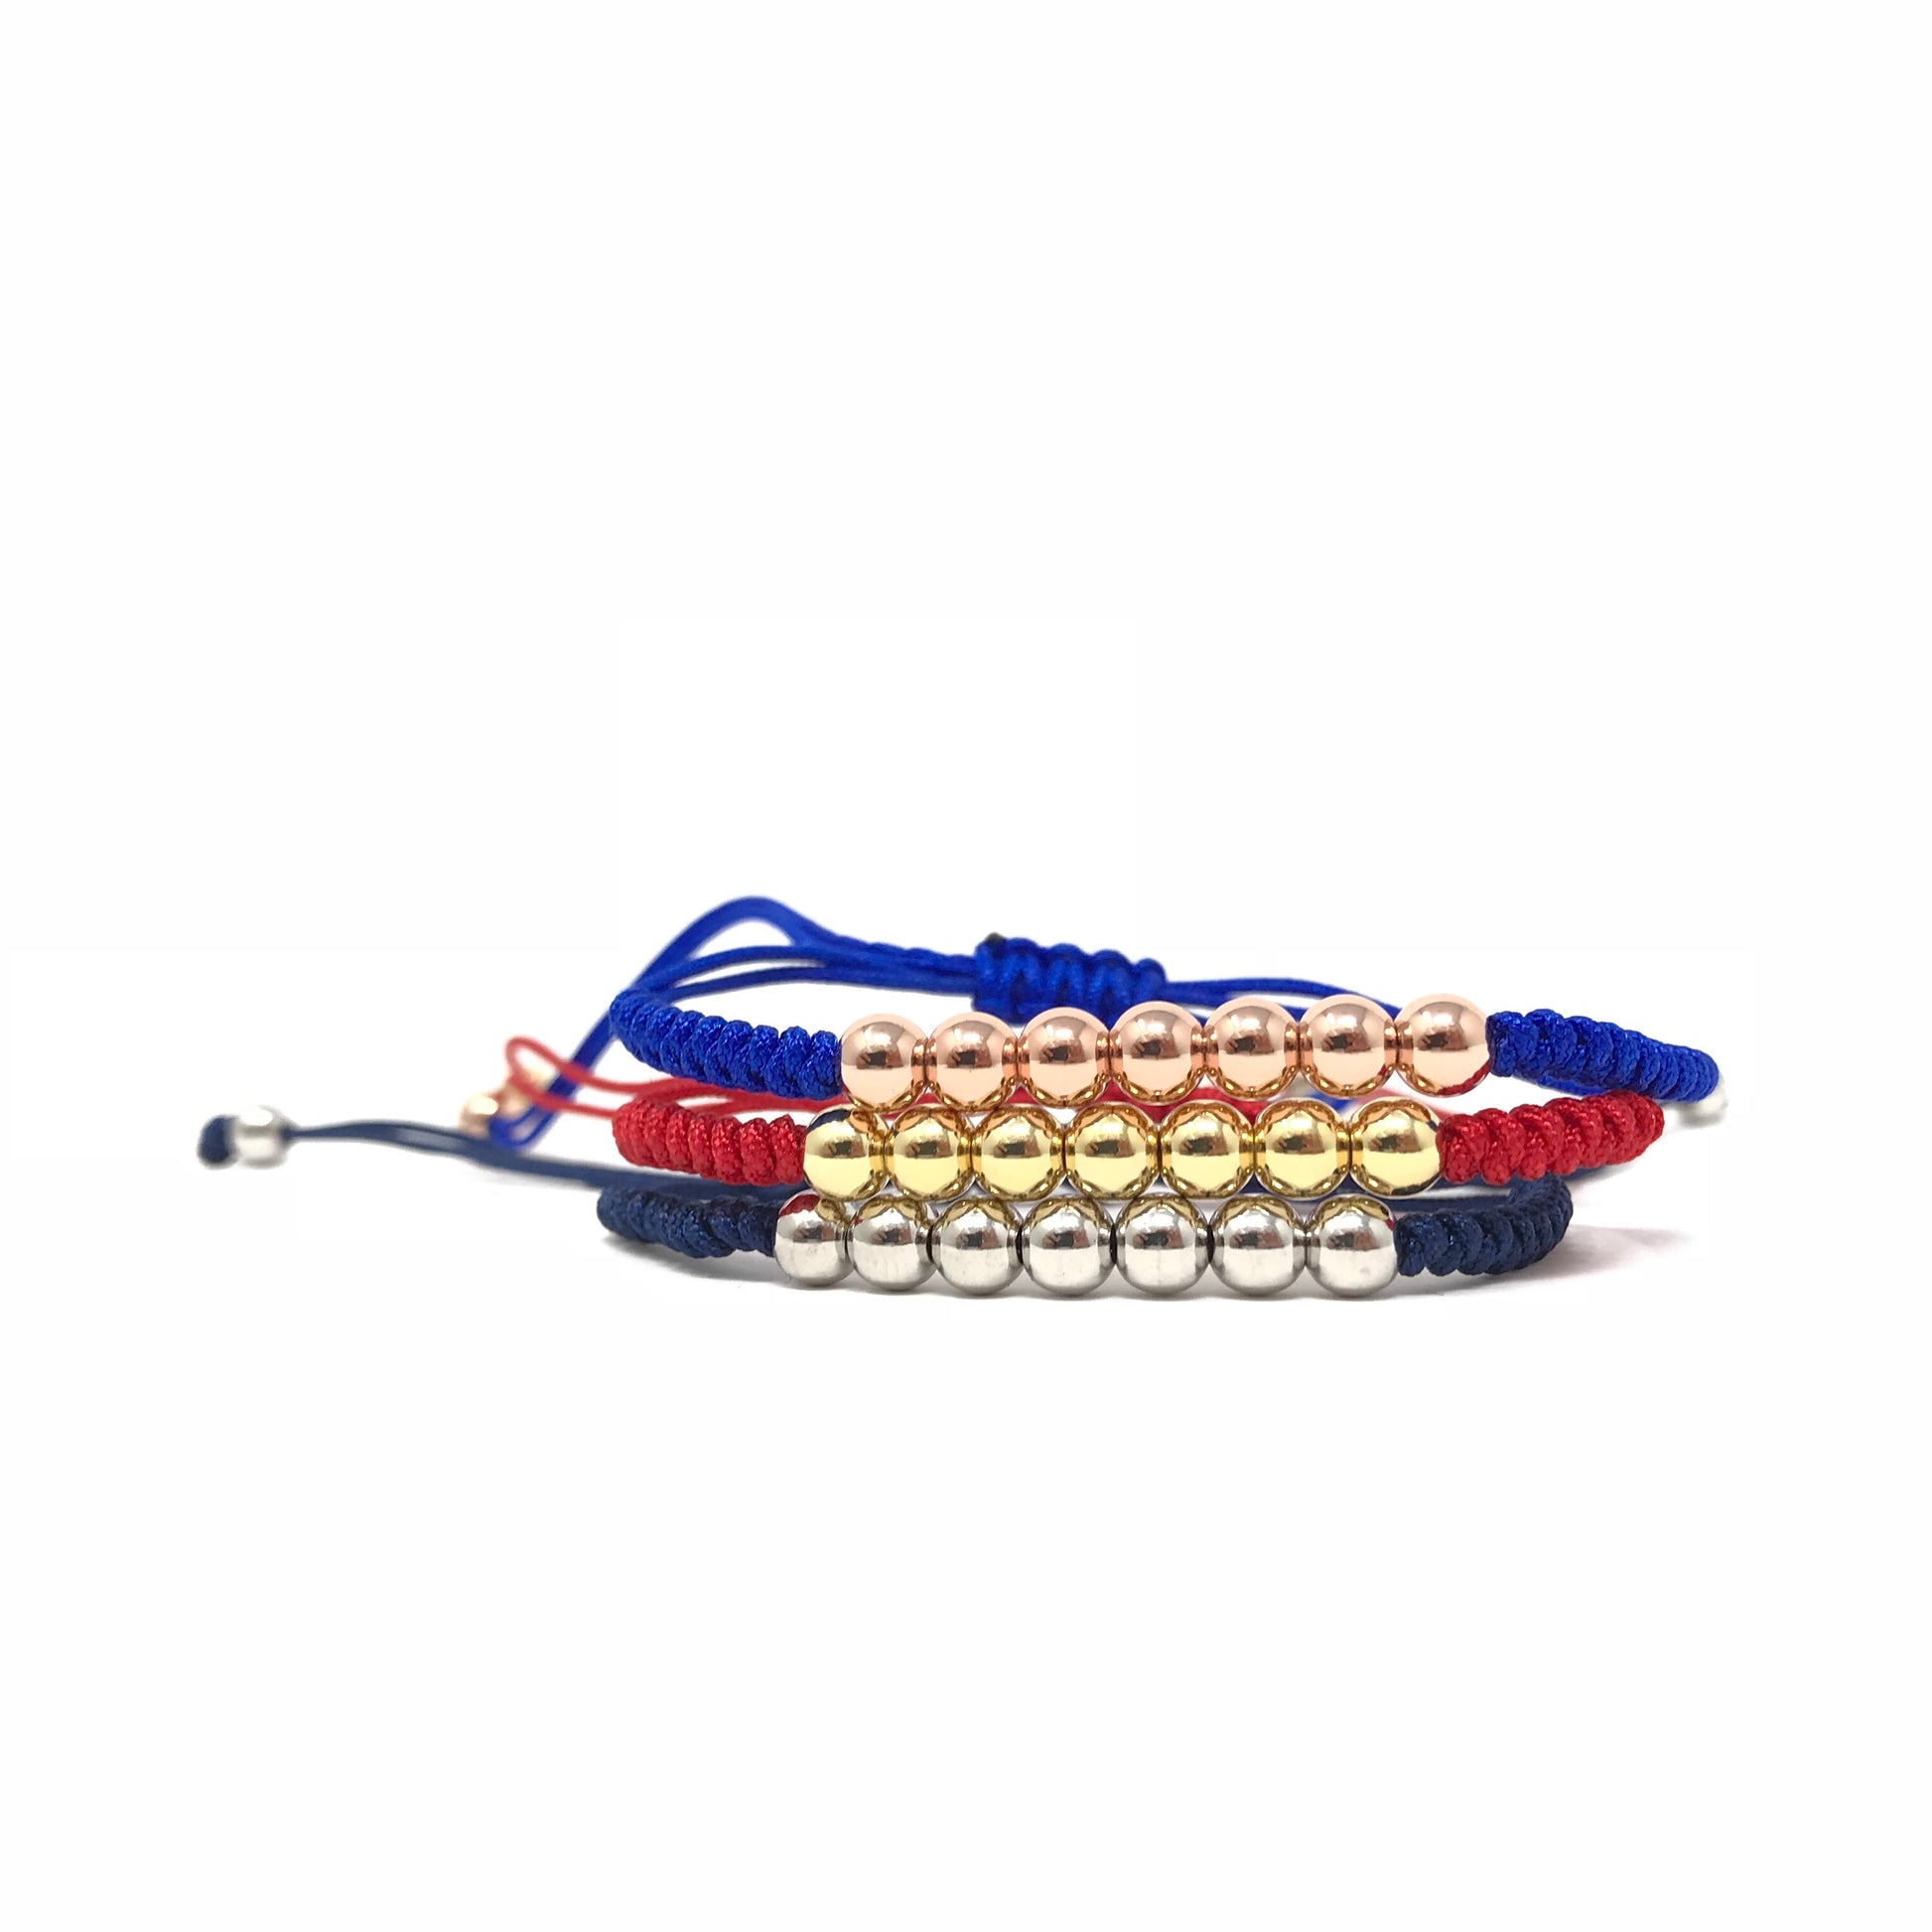 Beaded Adjustable Bracelet - Retail Therapy Jewelry